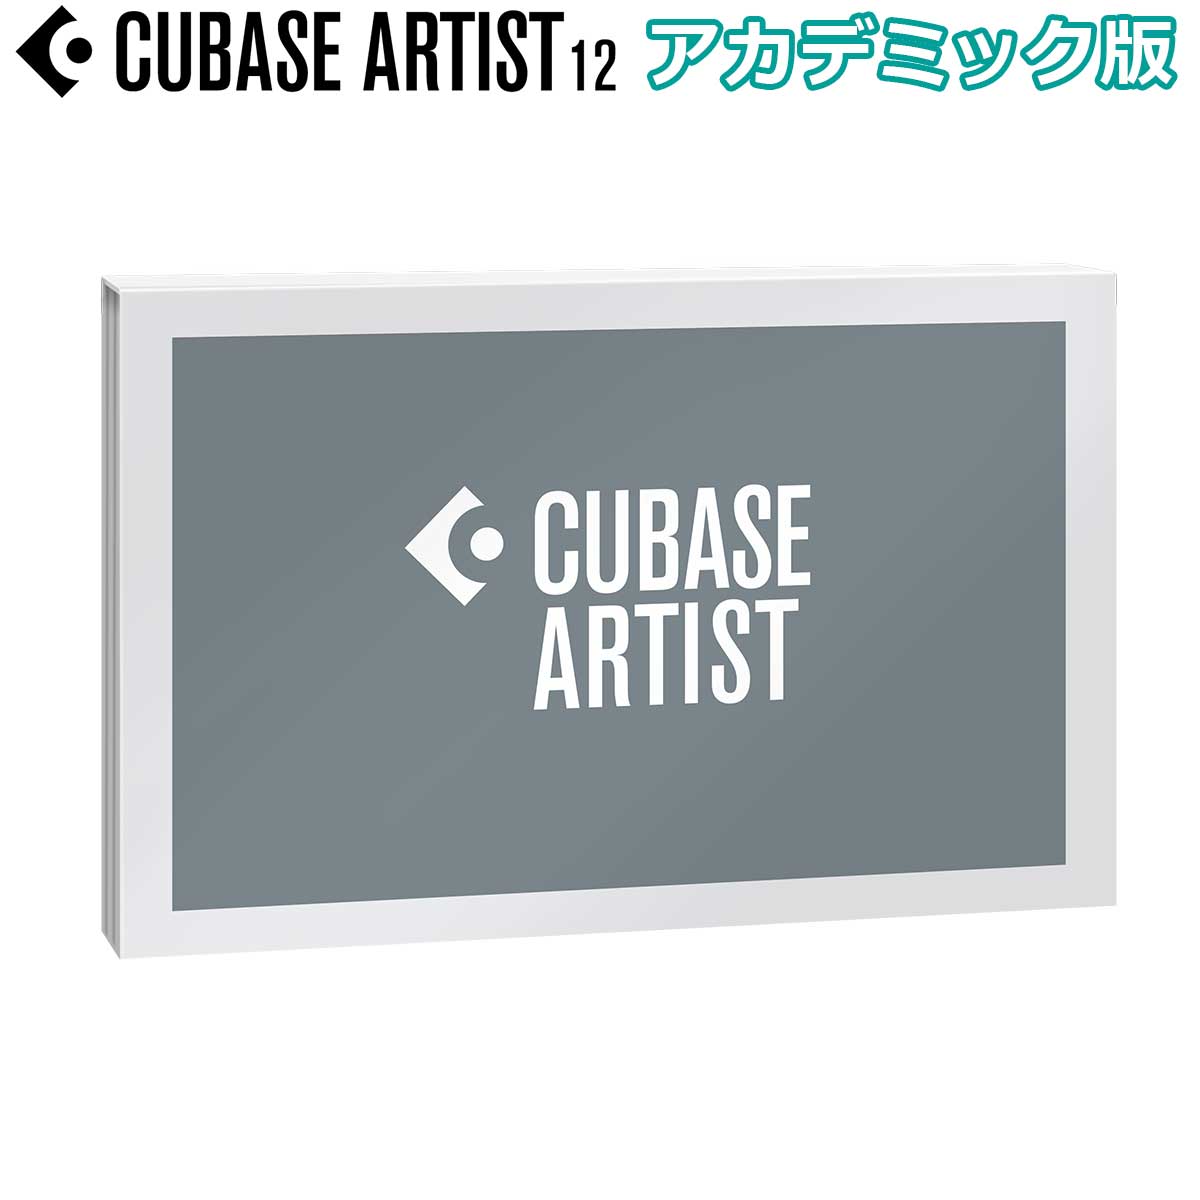 CUBASE ARTIST 12